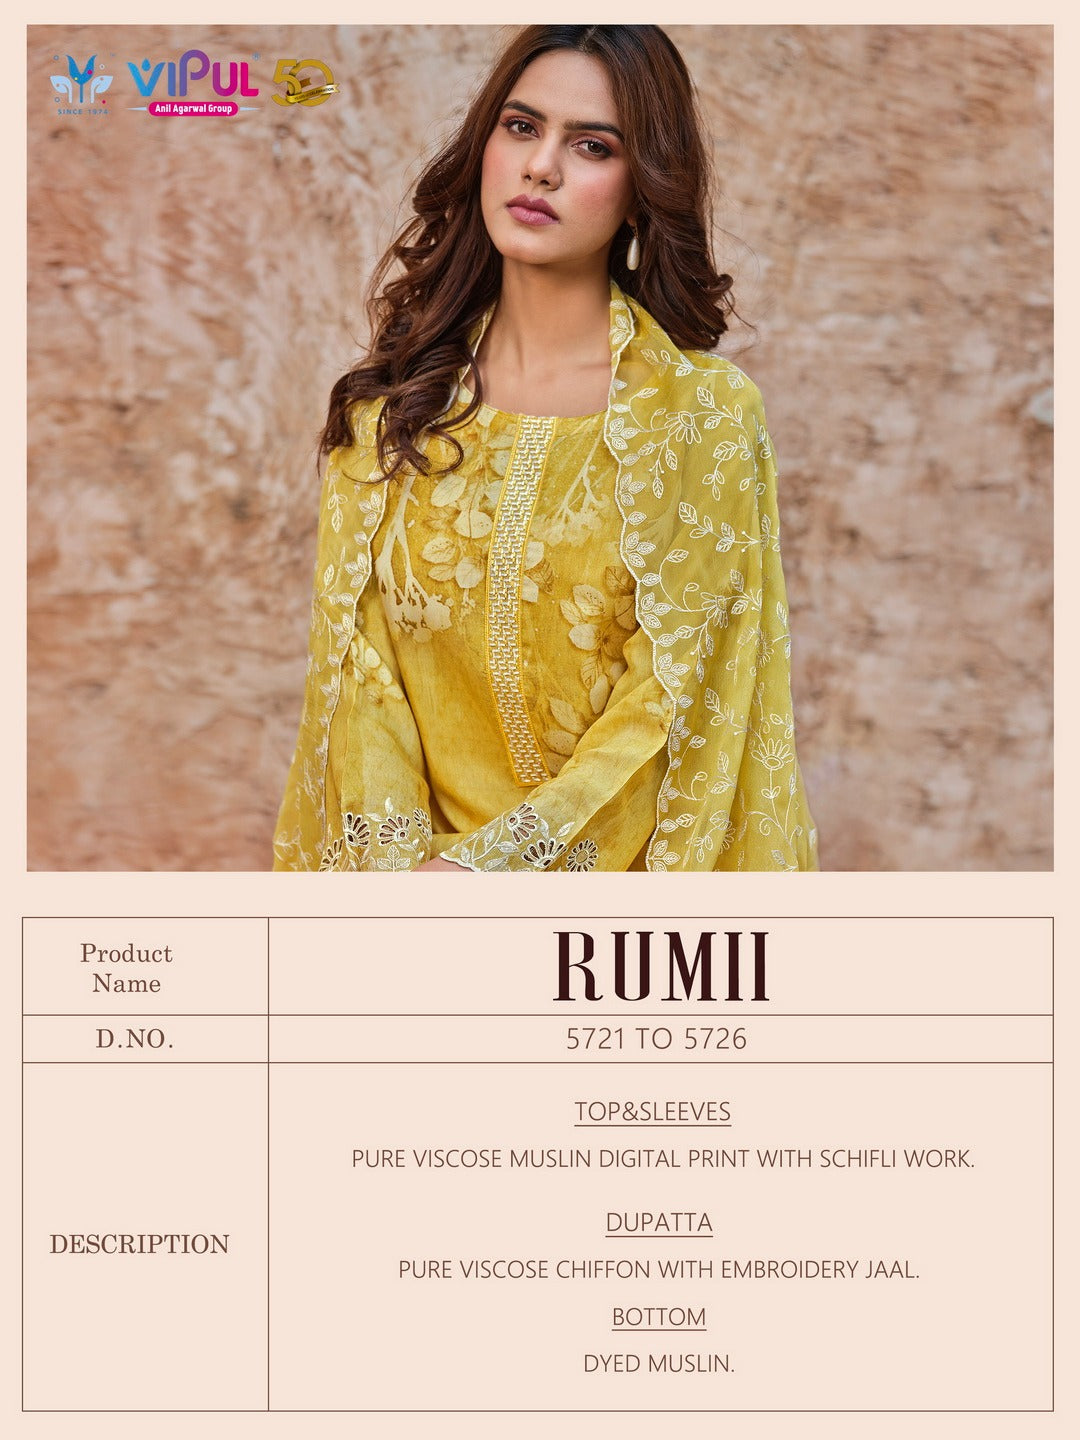 Rumii Vipul Viscose Muslin Pant Style Suits Supplier India